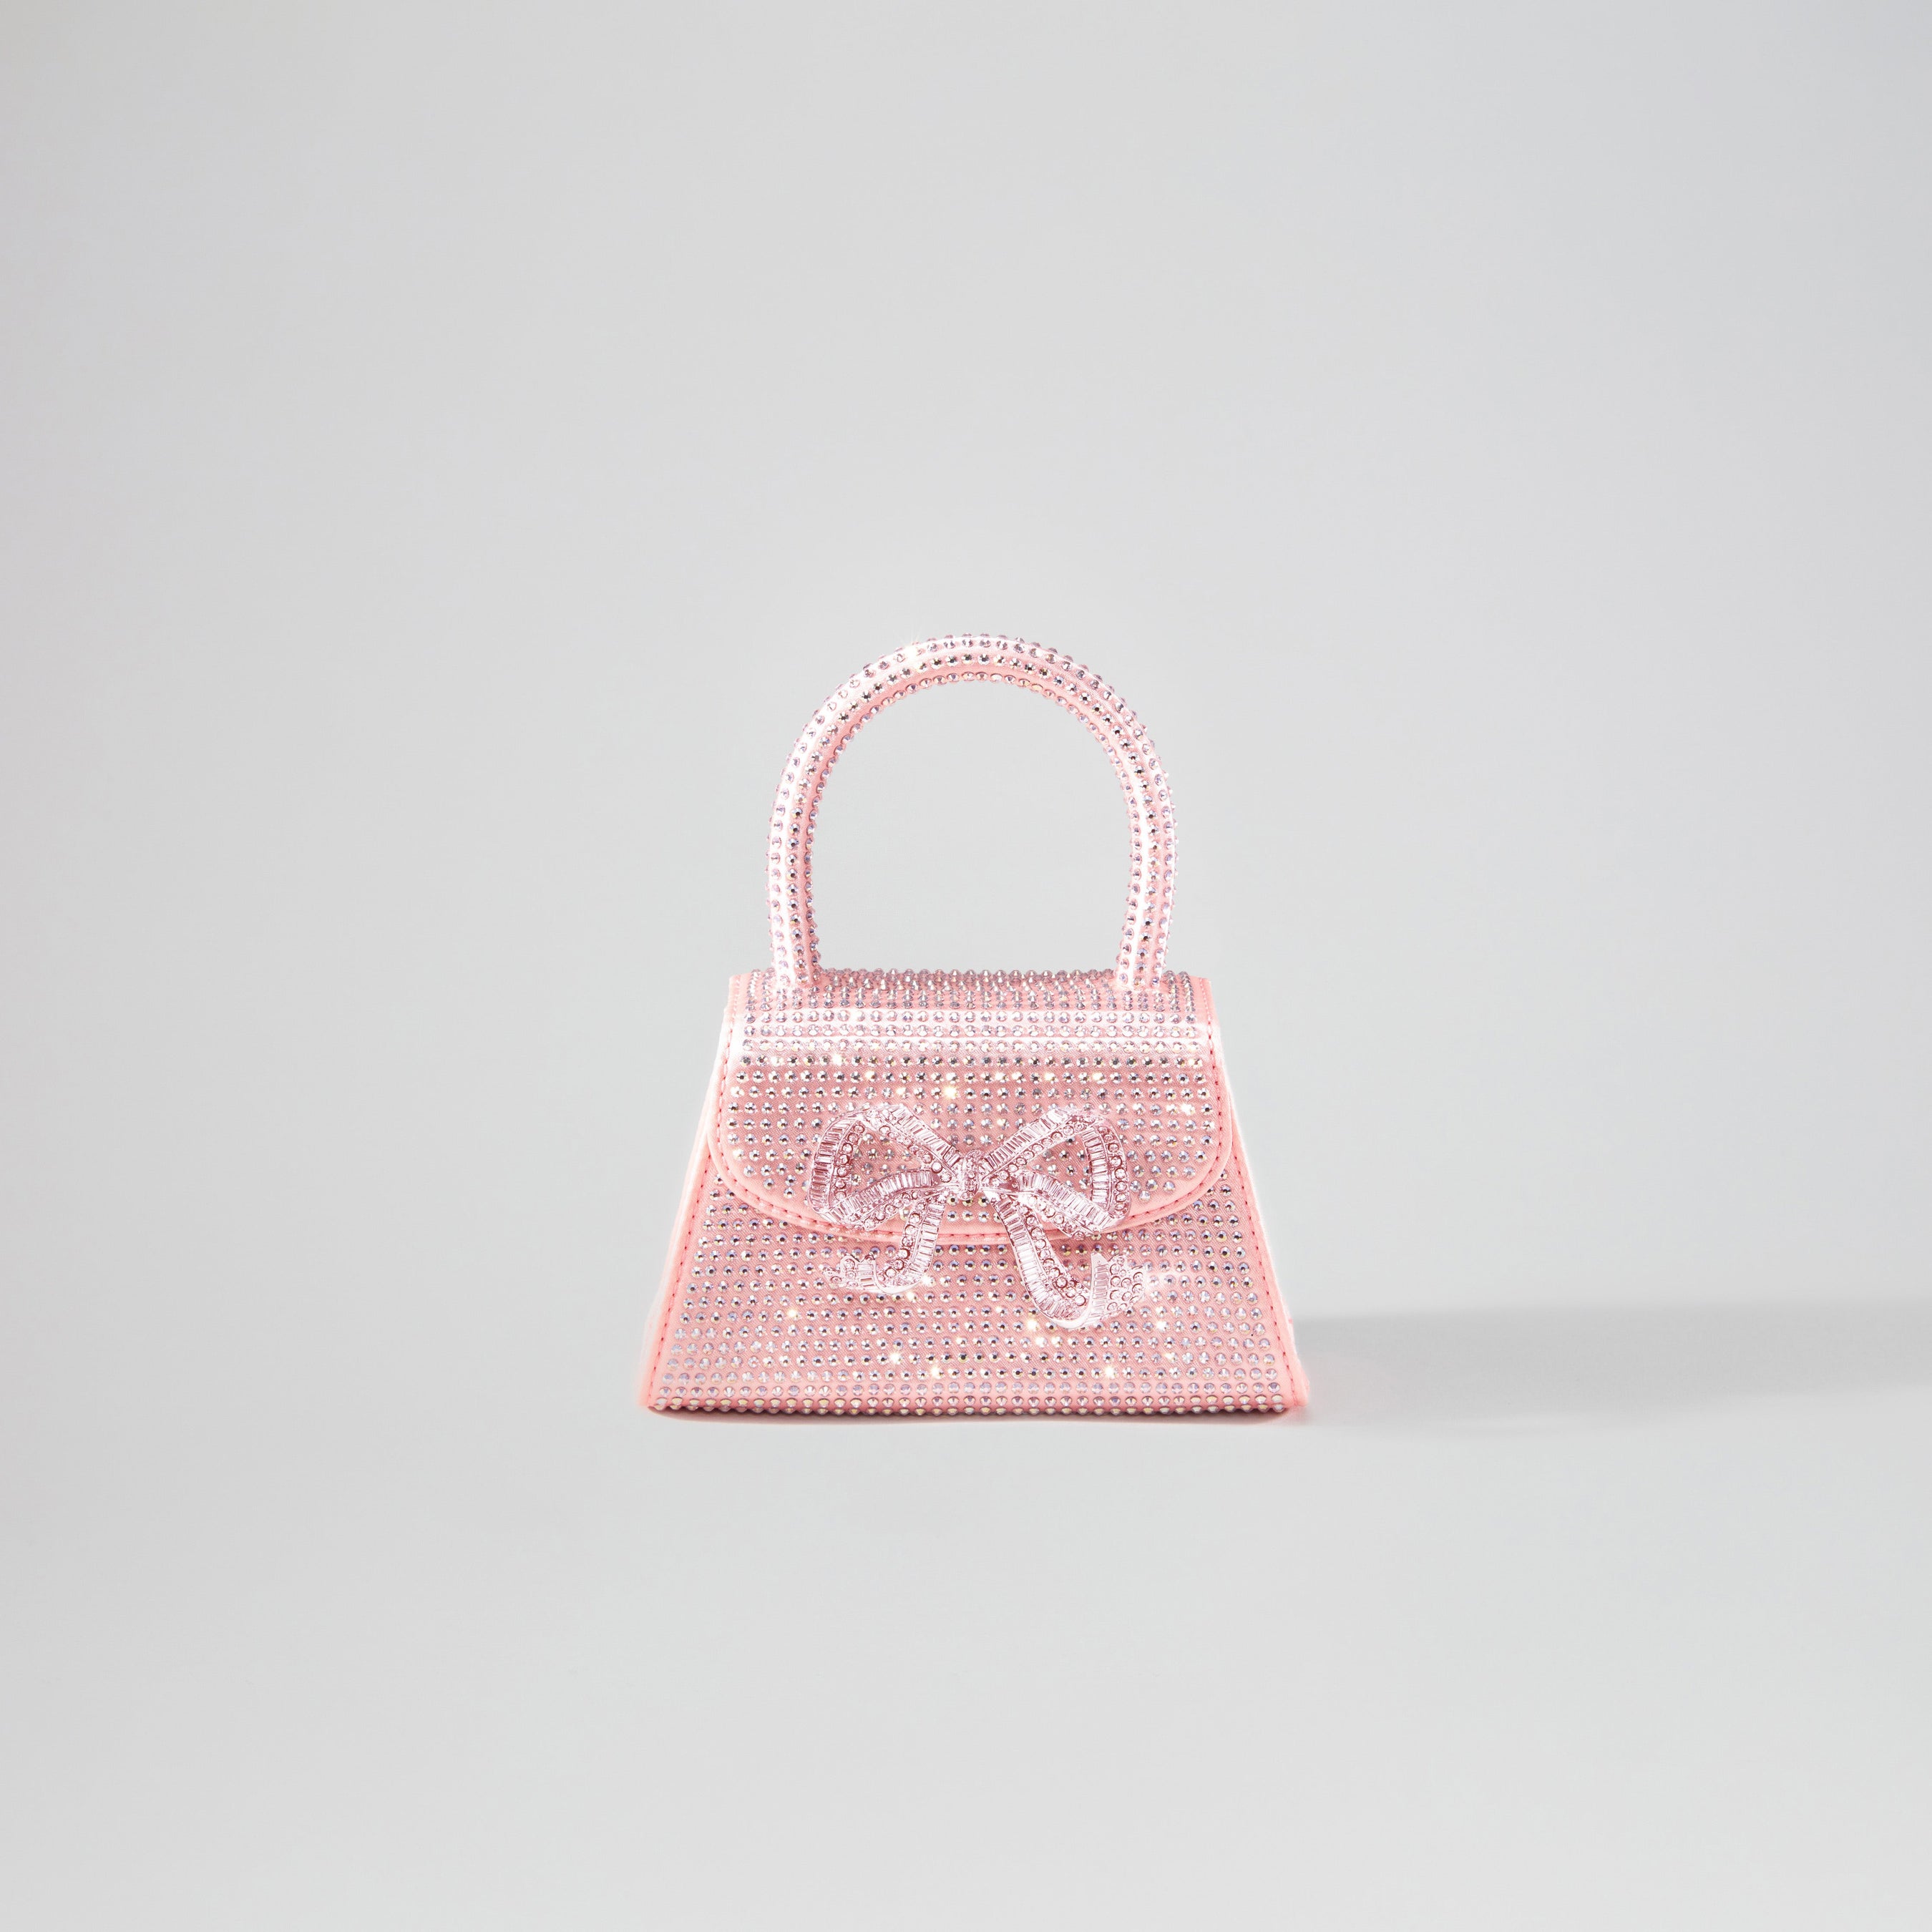 micro pink bag